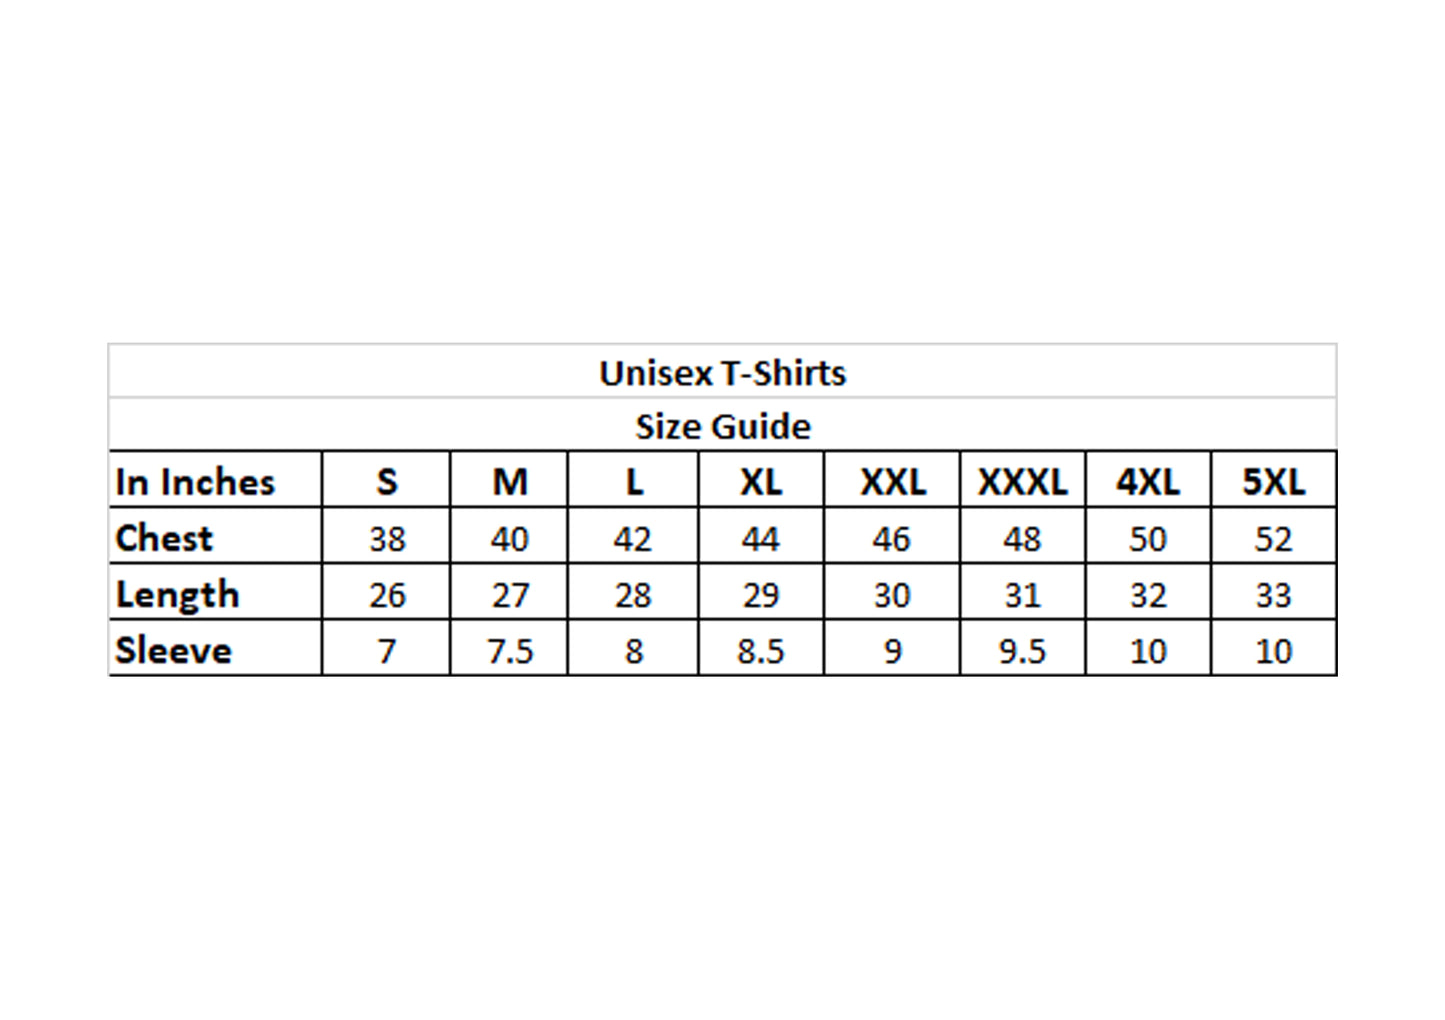 KARACHAY CHERKESSIA Seasons Unisex T-Shirt (Black)